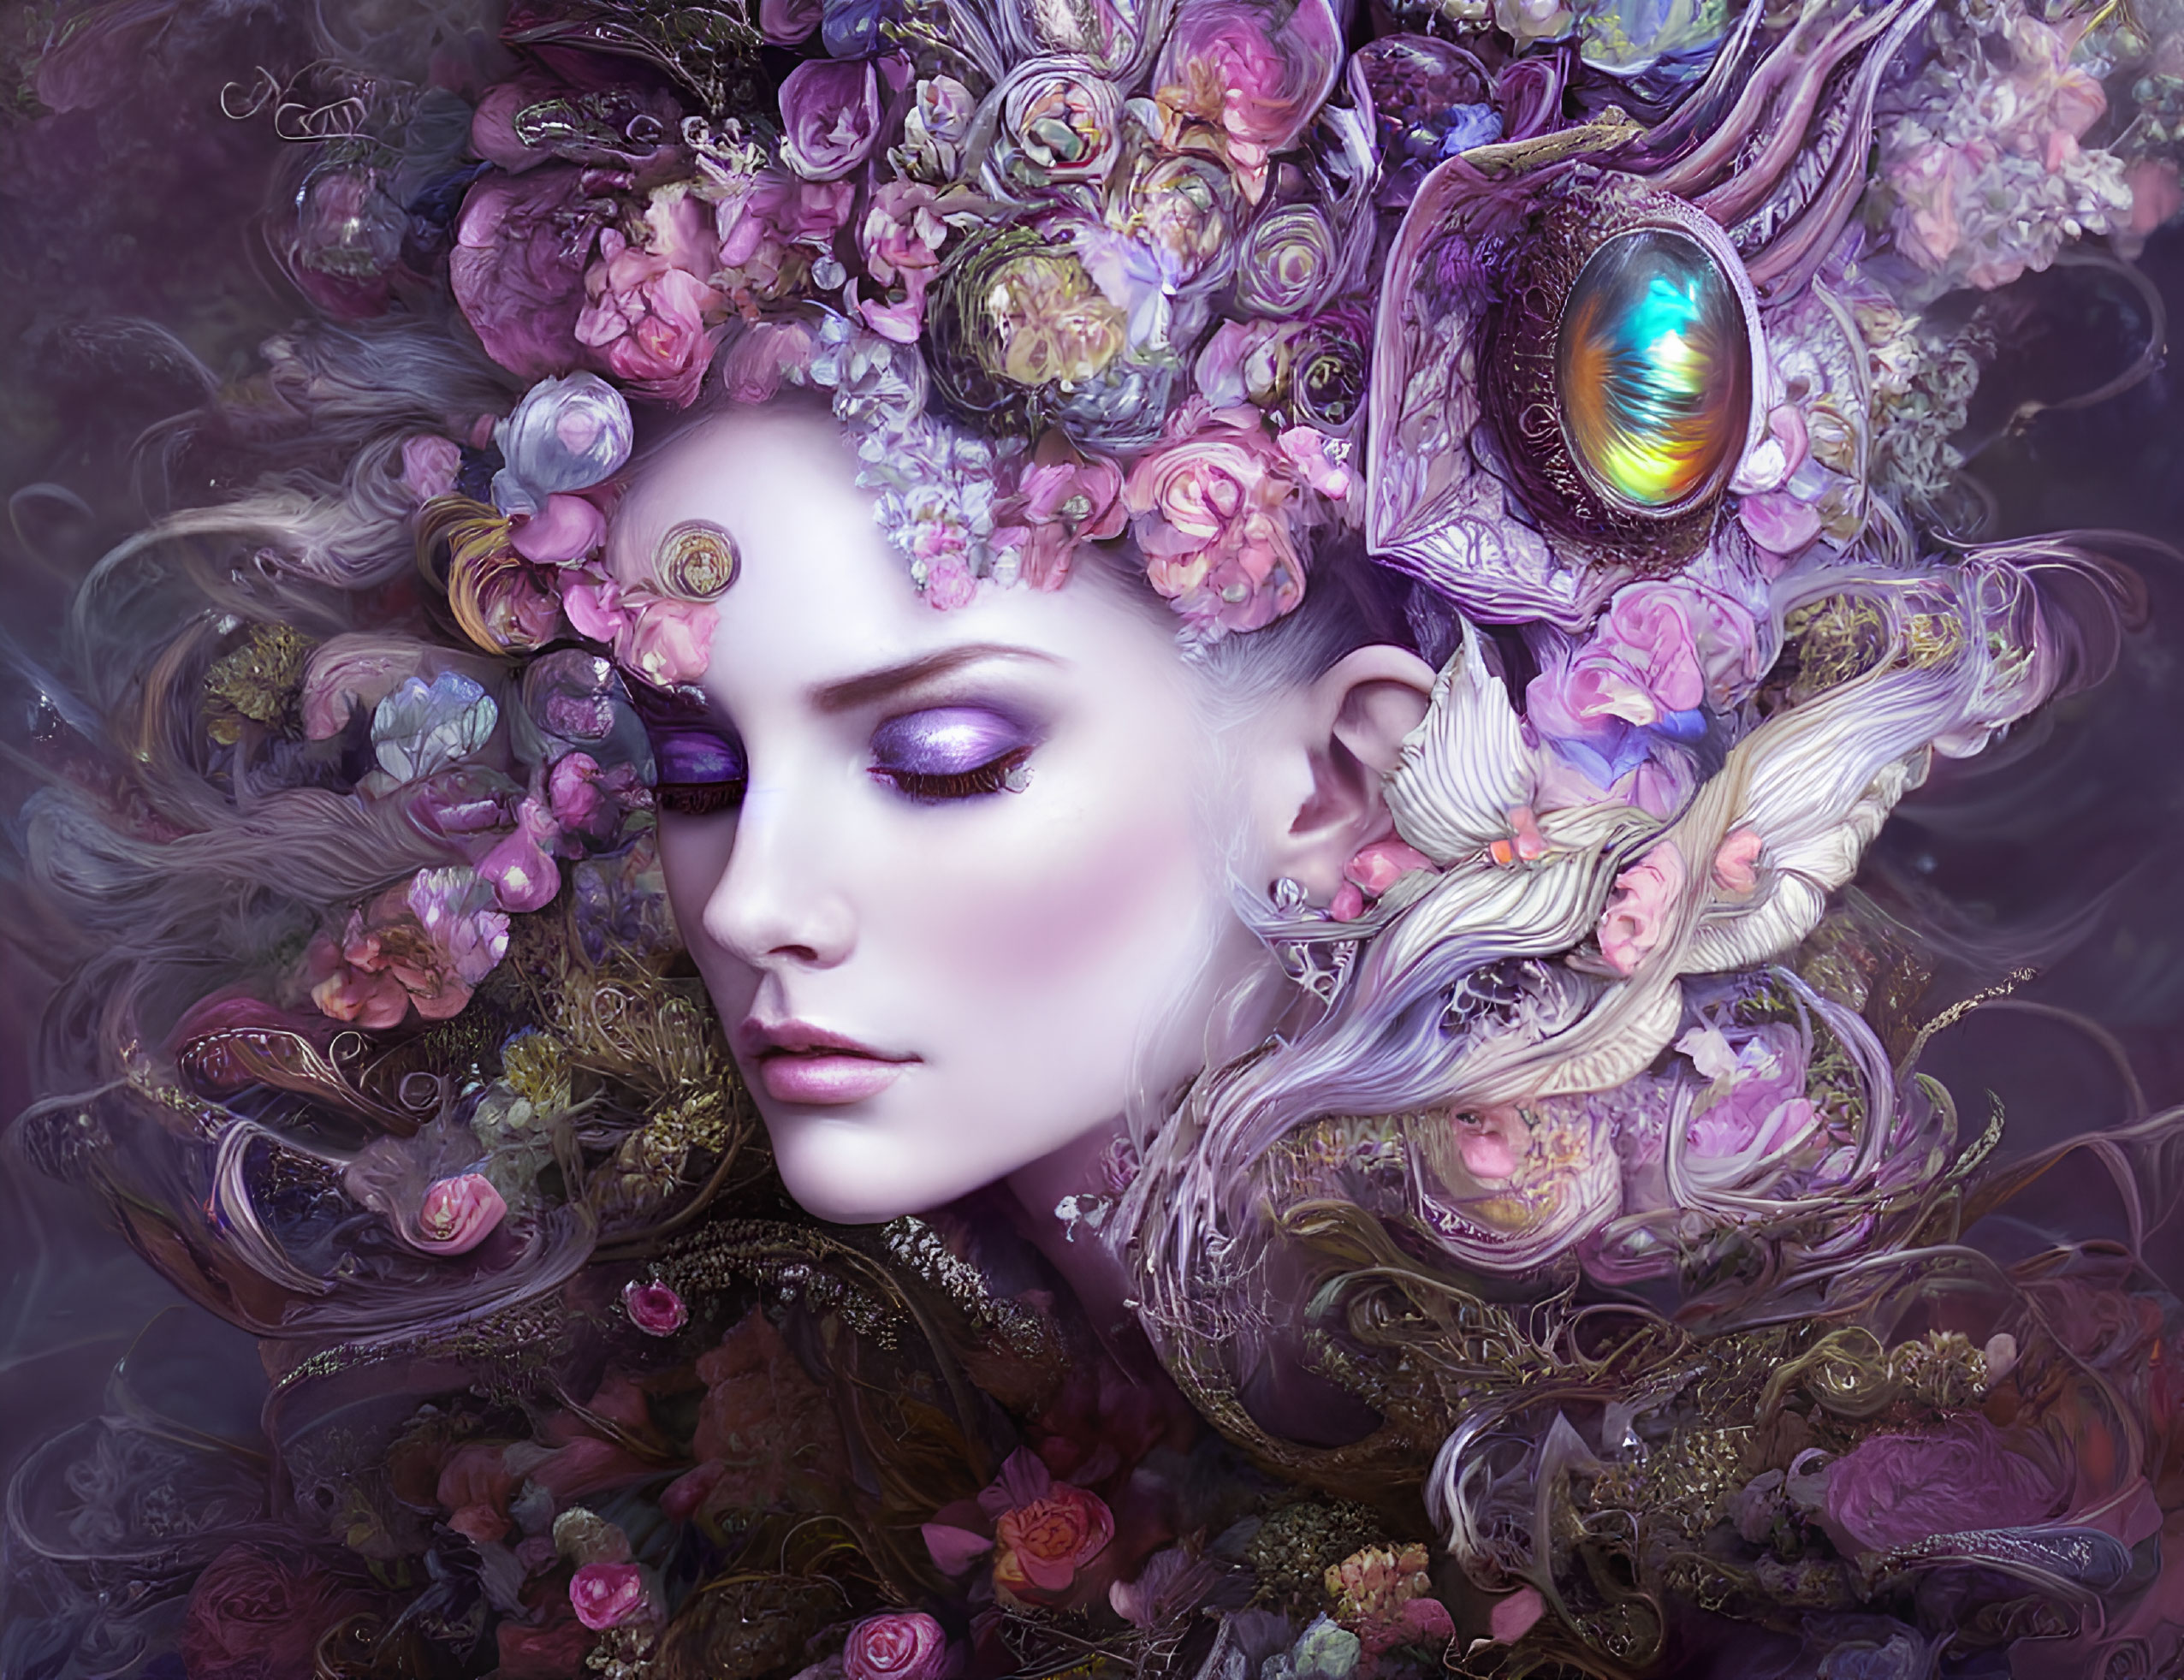 Digital artwork featuring woman with elaborate flower and jewel headdress.